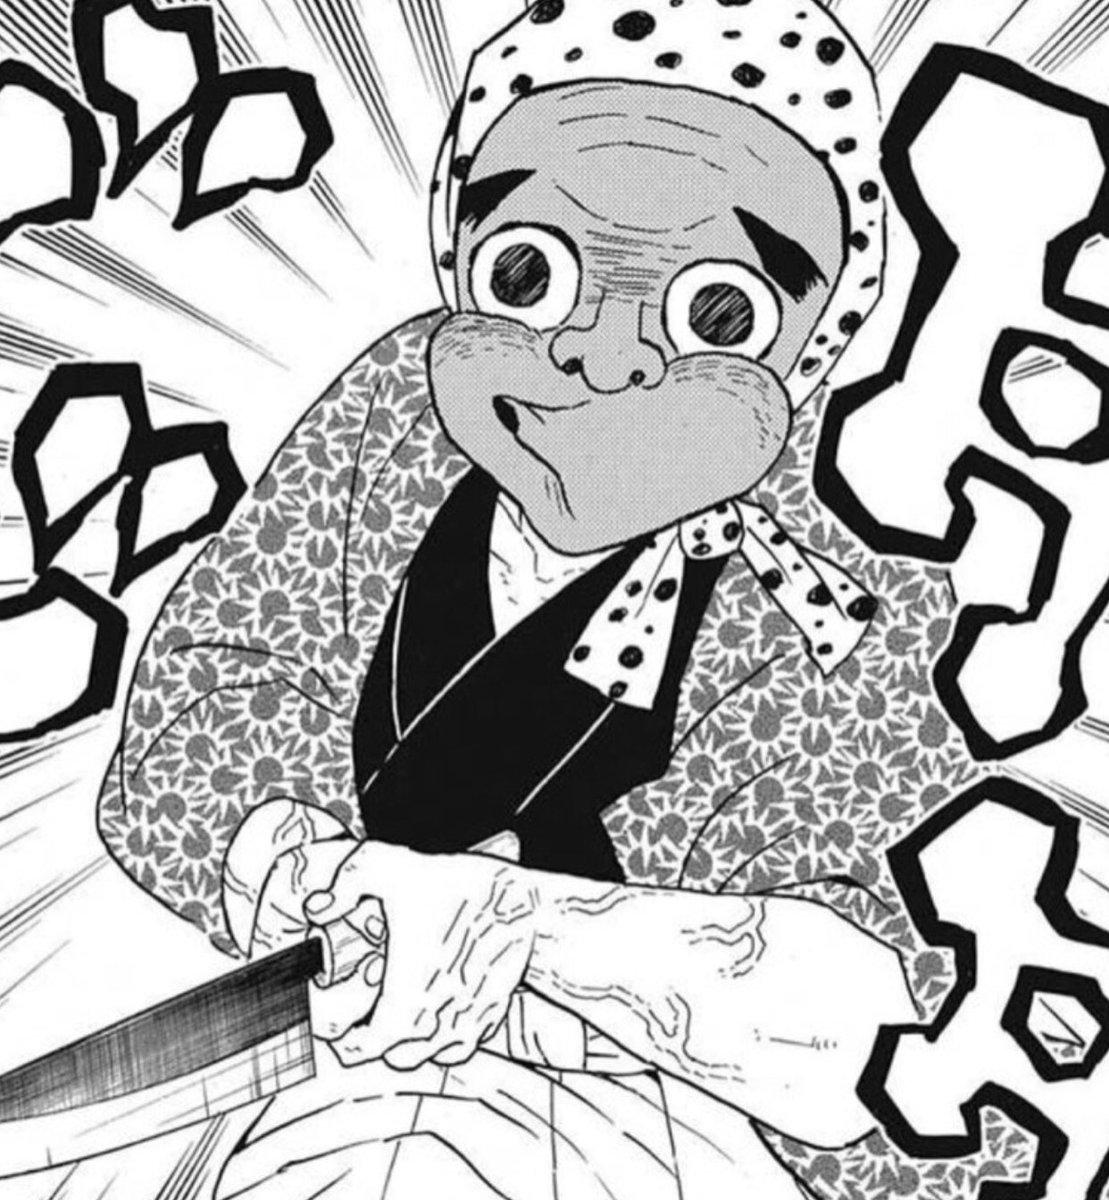 Haganezuka Kimetsu wallpaper by AnimeChidito - Download on ZEDGE™